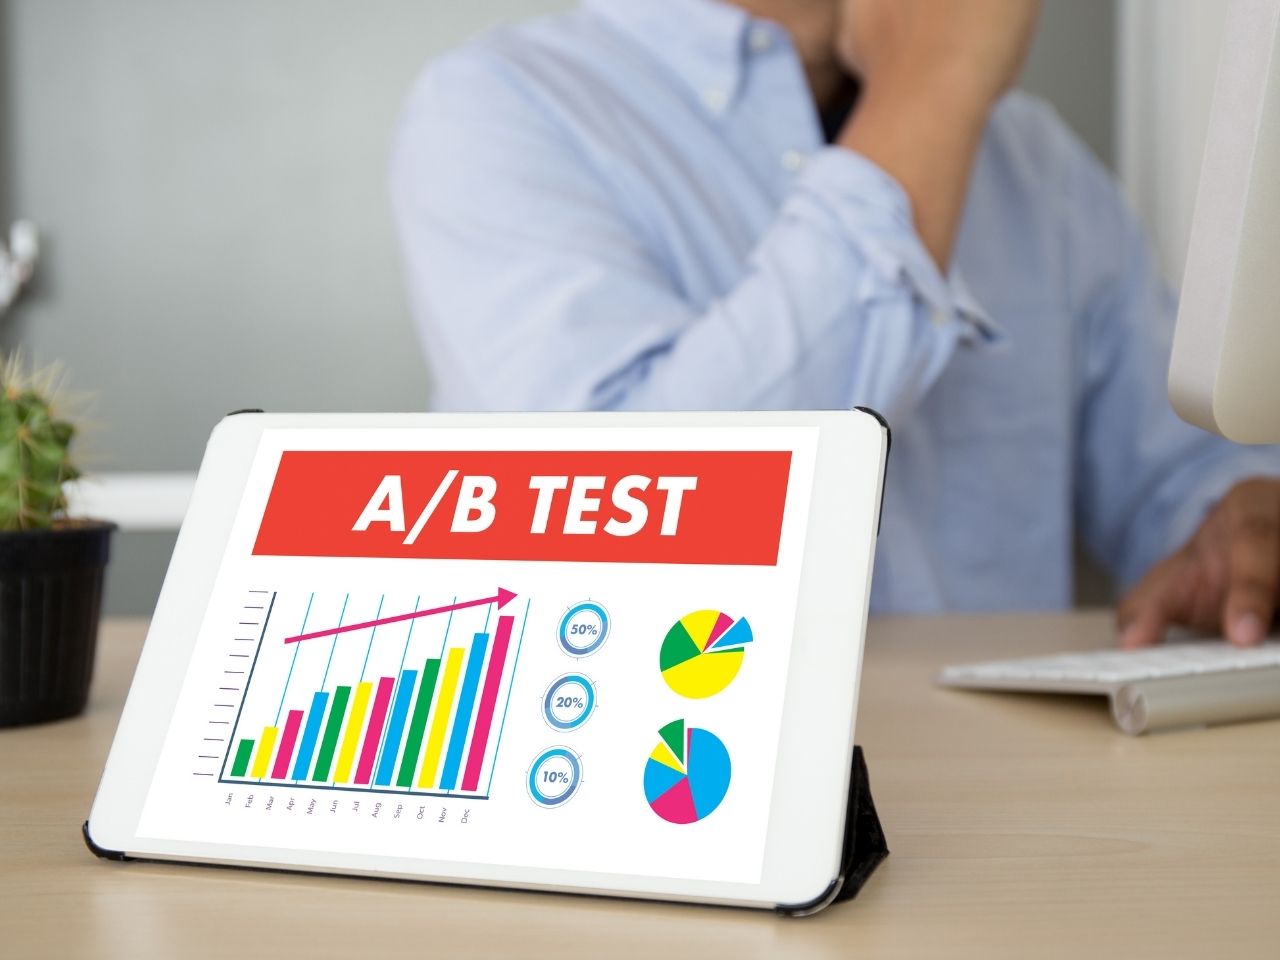 AB test on a tablet